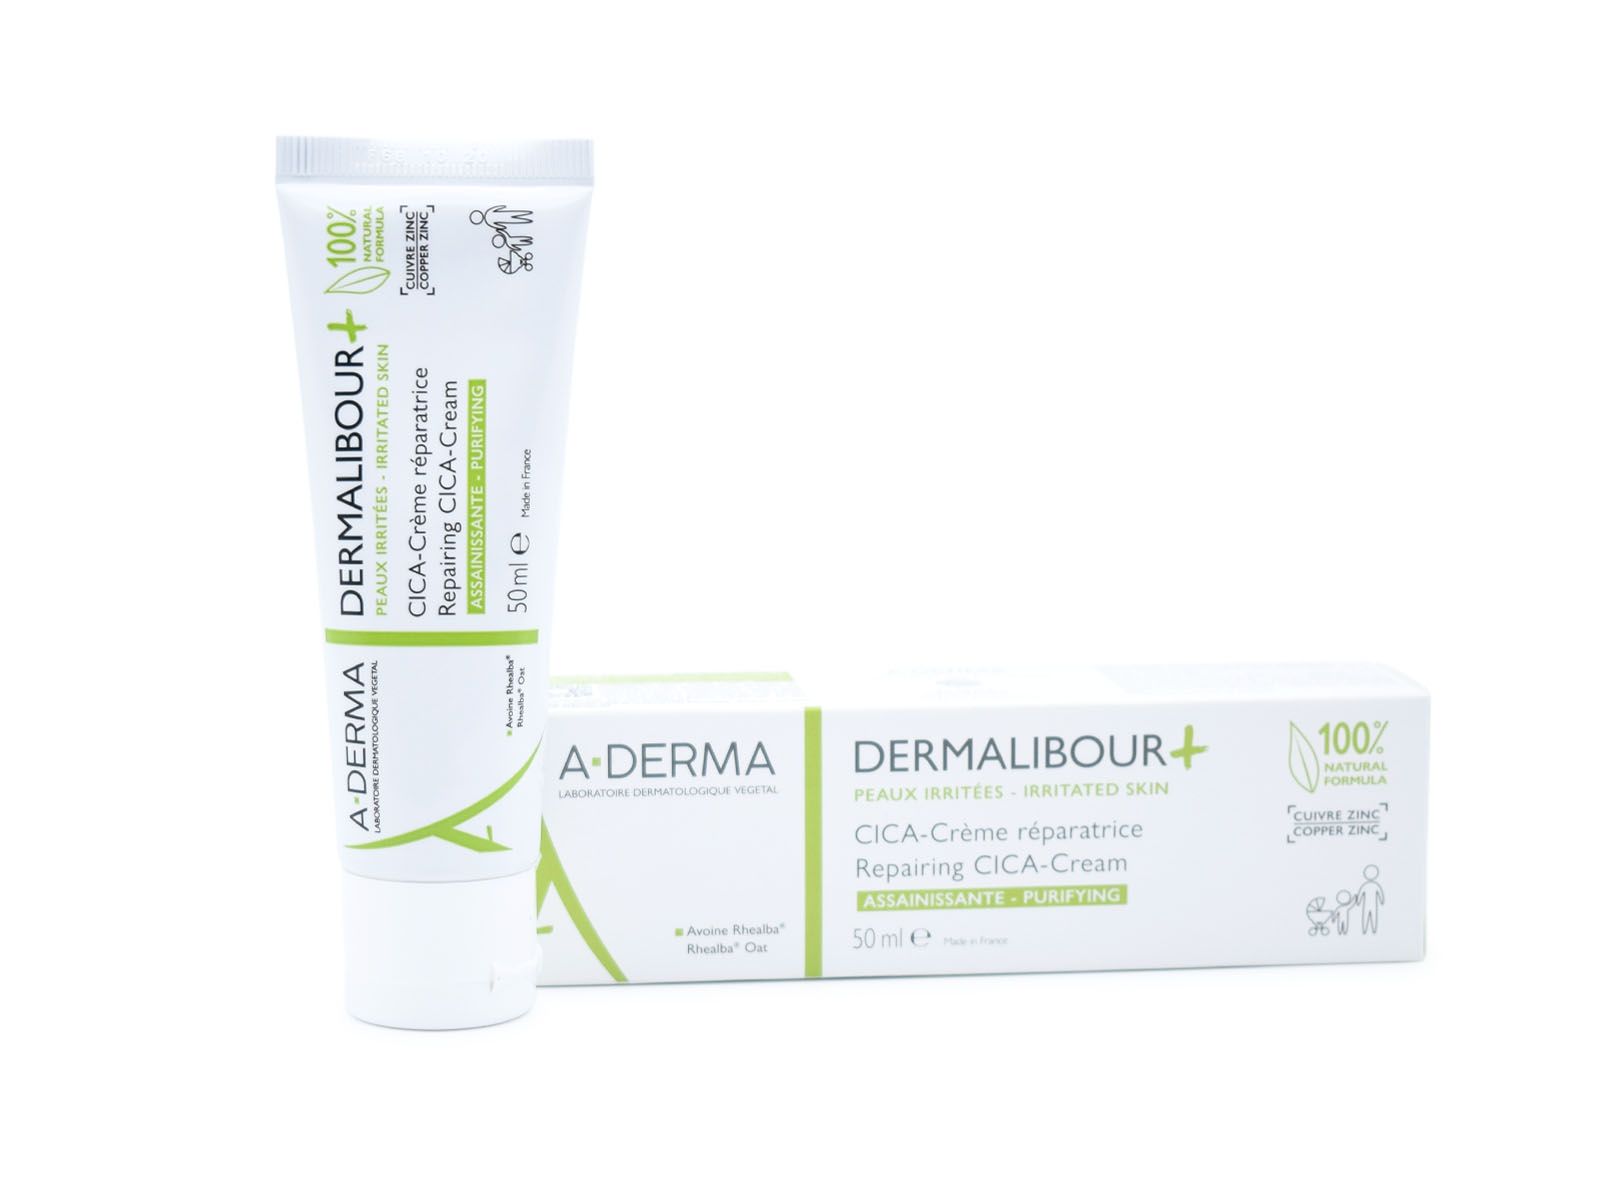 A-Derma Dermalibour+ Cica Repairing Cream - 50ml – The French